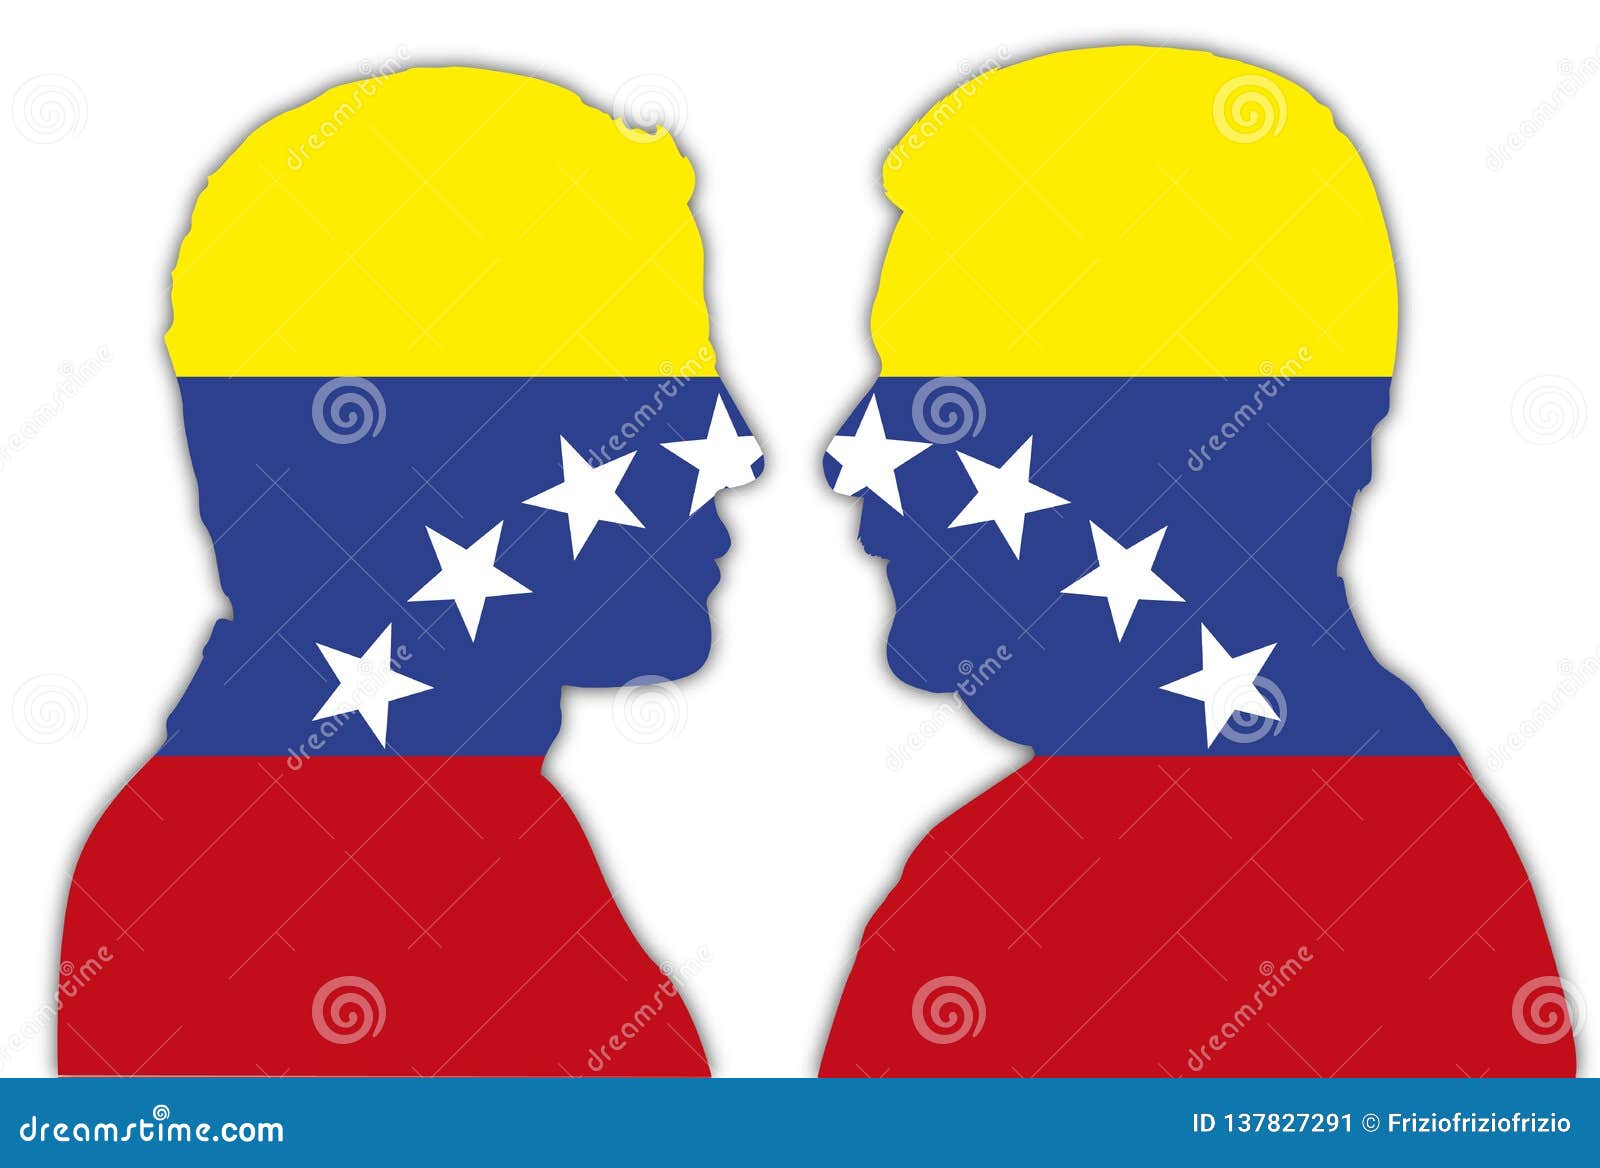 nicolas maduro vs juan guaidÃÂ² portrait silhouettes on the venezuela flag